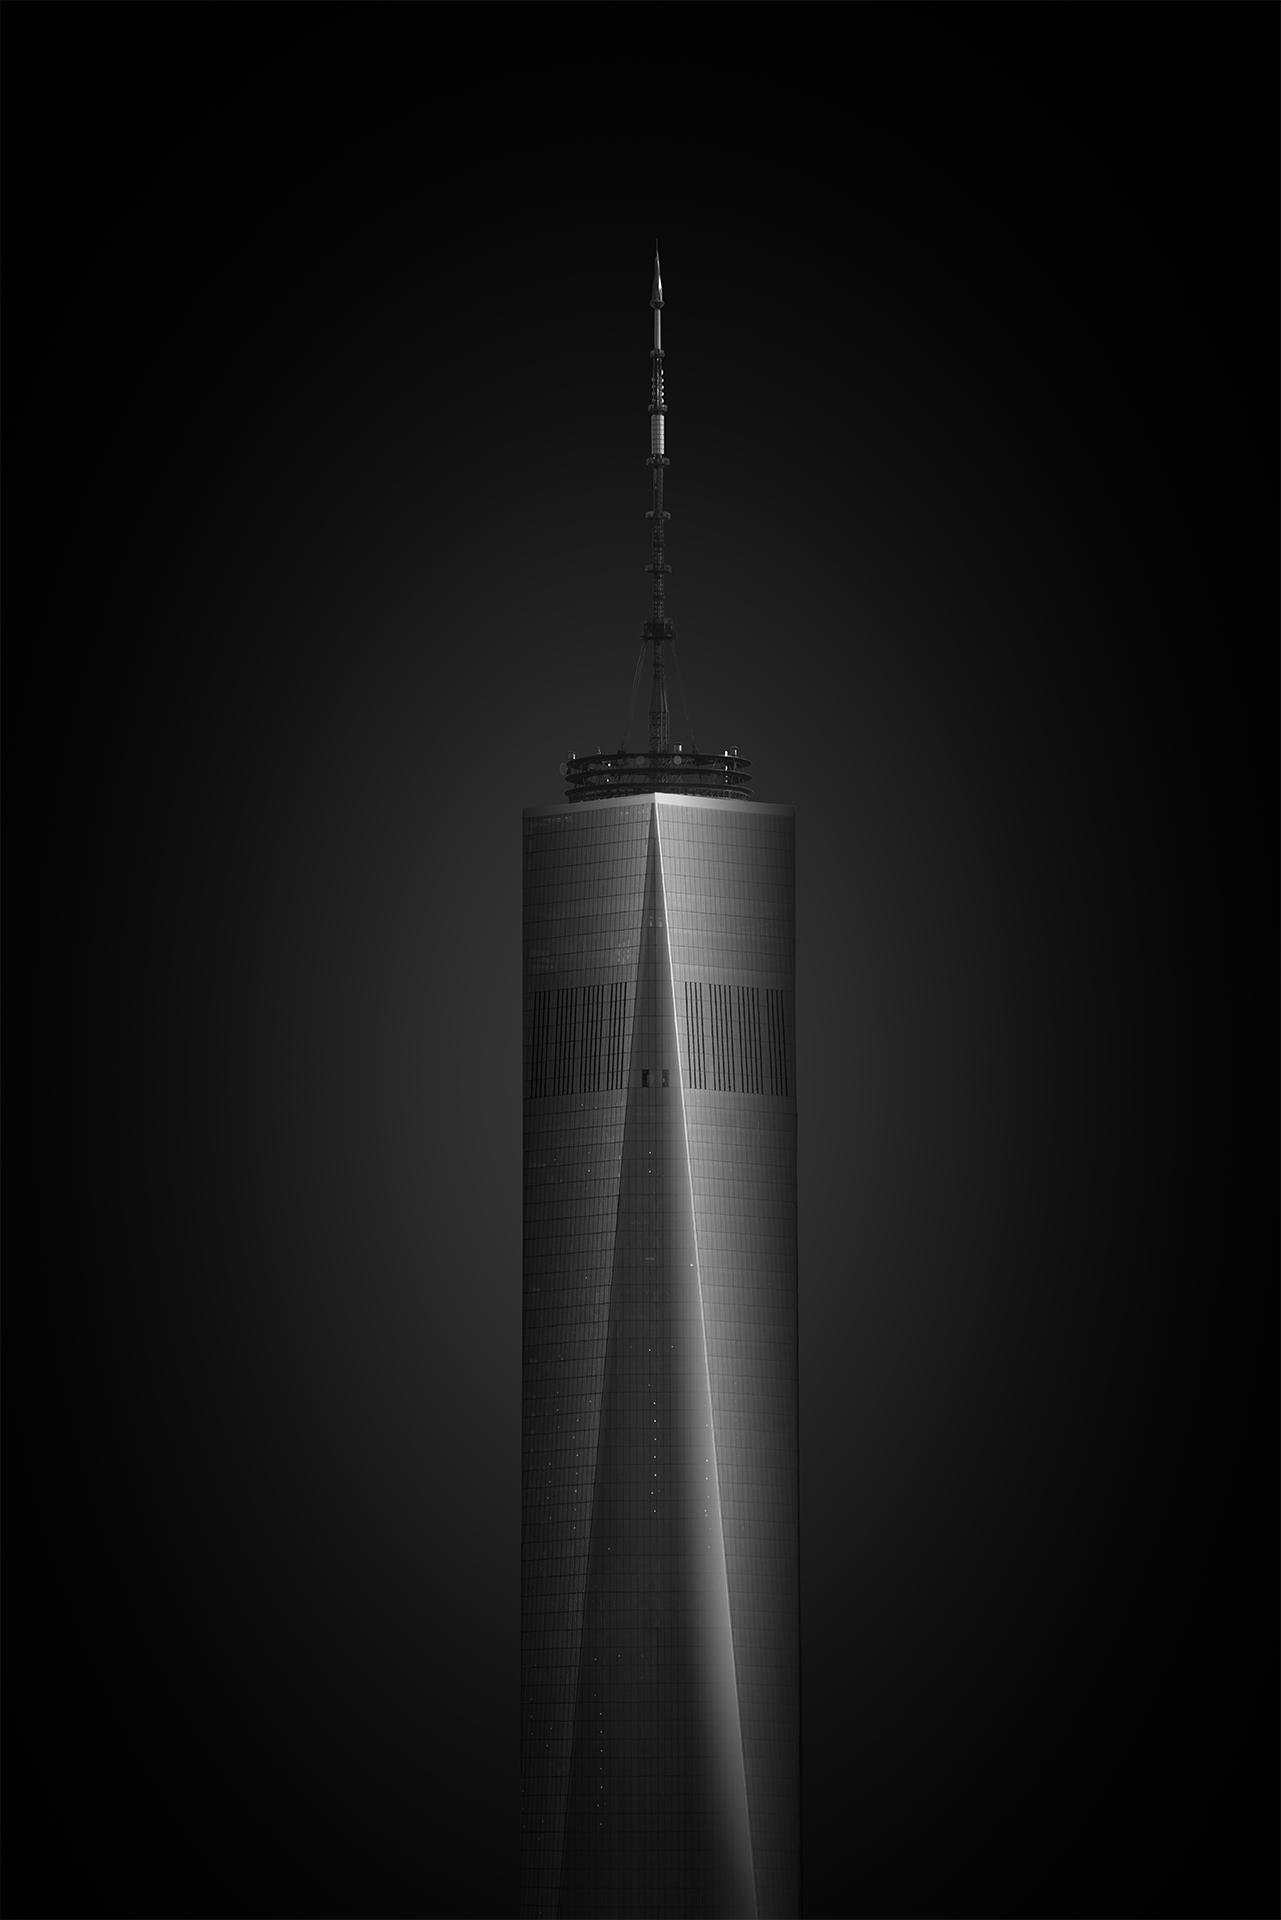 New York Photography Awards Winner - Freedom Tower